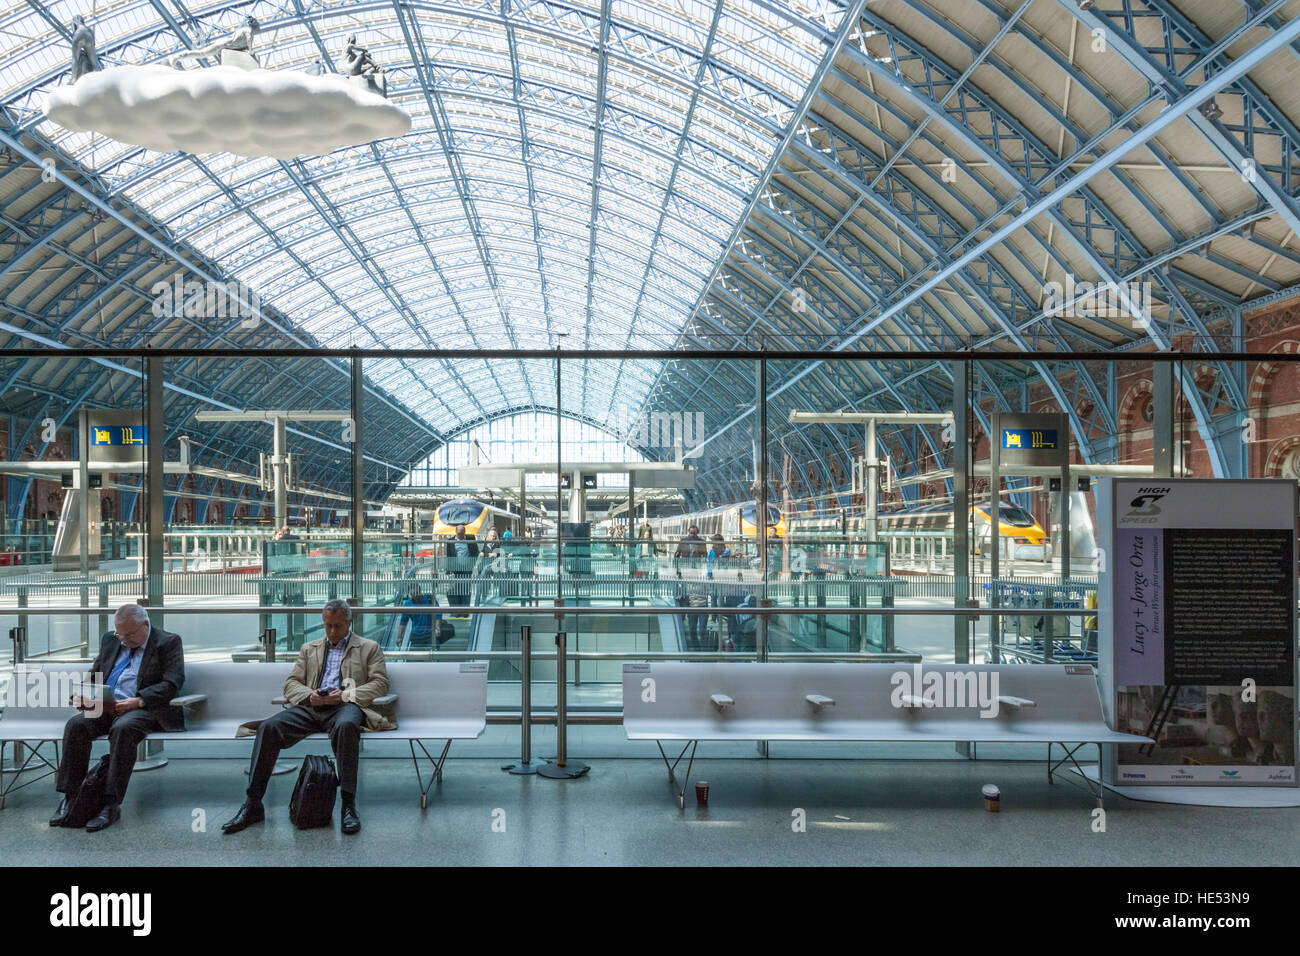 St Pancras International Station interior, London, UK Stock Photo